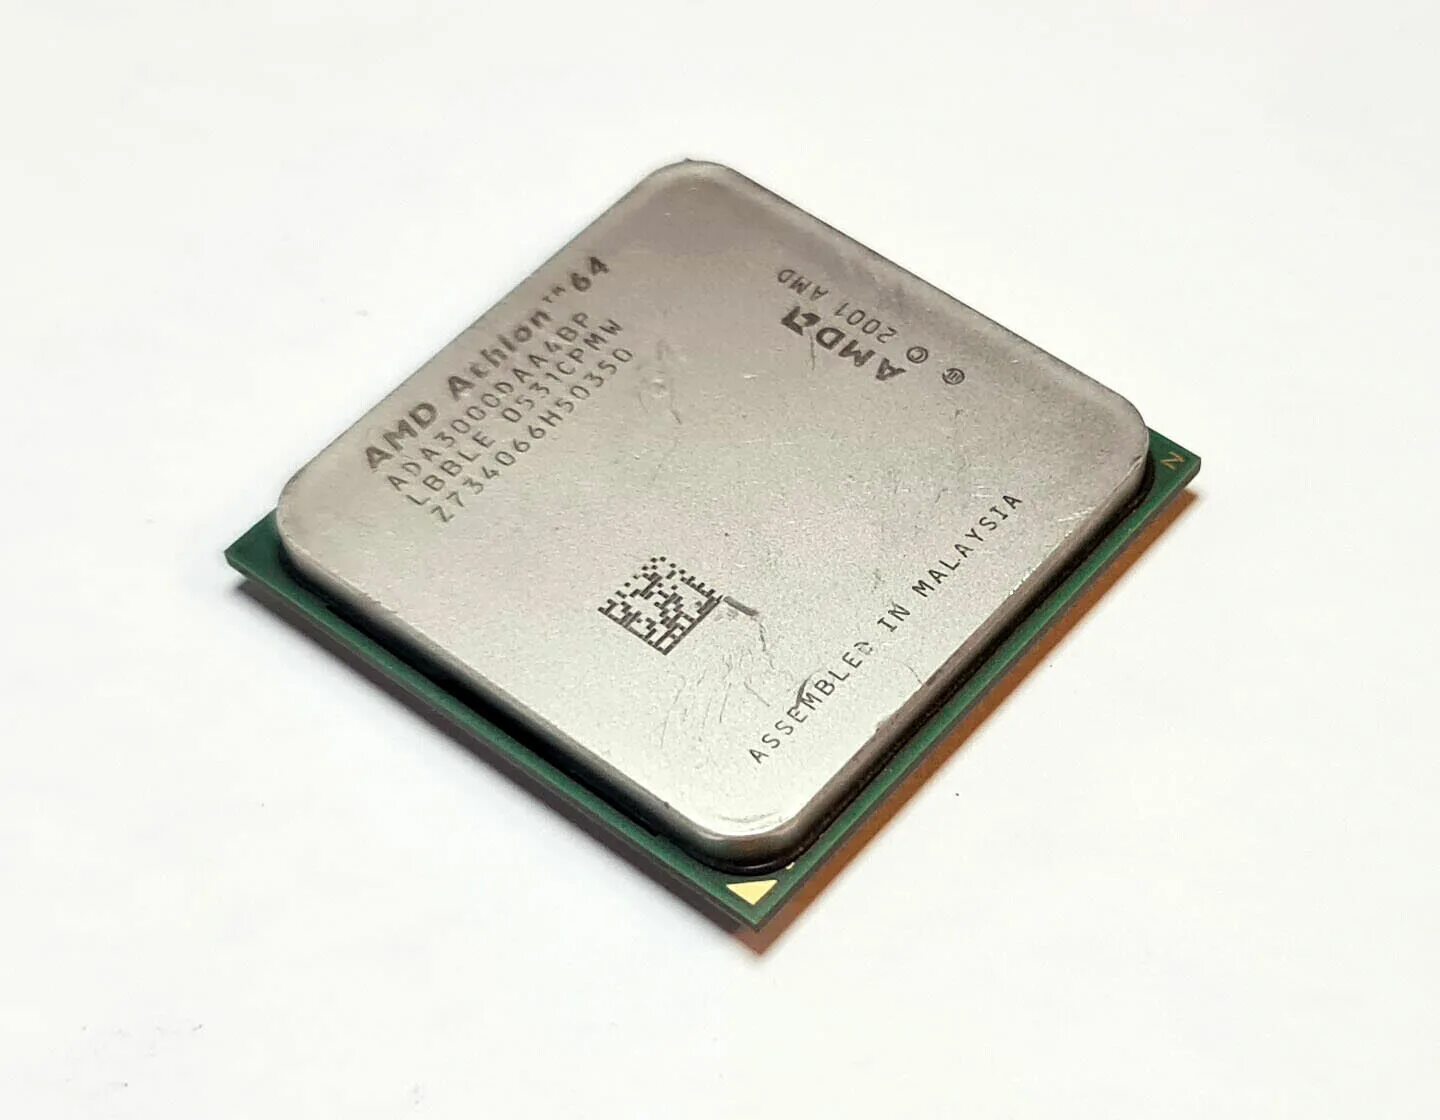 Athlon 64 купить. Процессор AMD Athlon 64 Socket 939. AMD Athlon 64 x2 5200+. Athlon 64 3000+ ada3000aep4ax. AMD Athlon 64 3000+ 1.8GHZ.